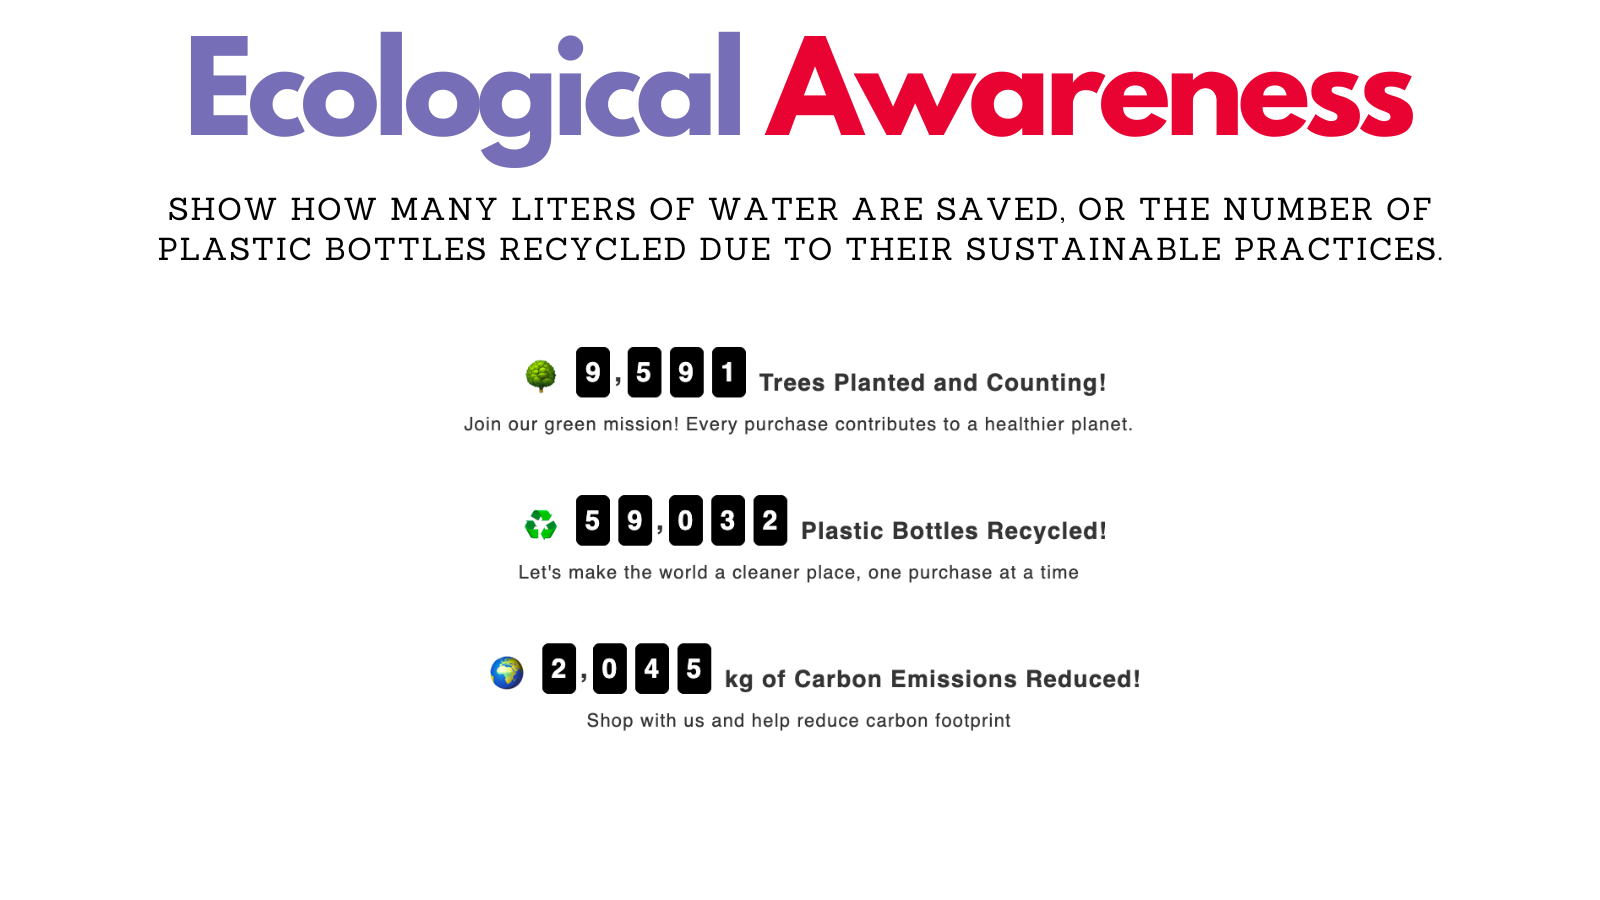 Ecological Awareness examples